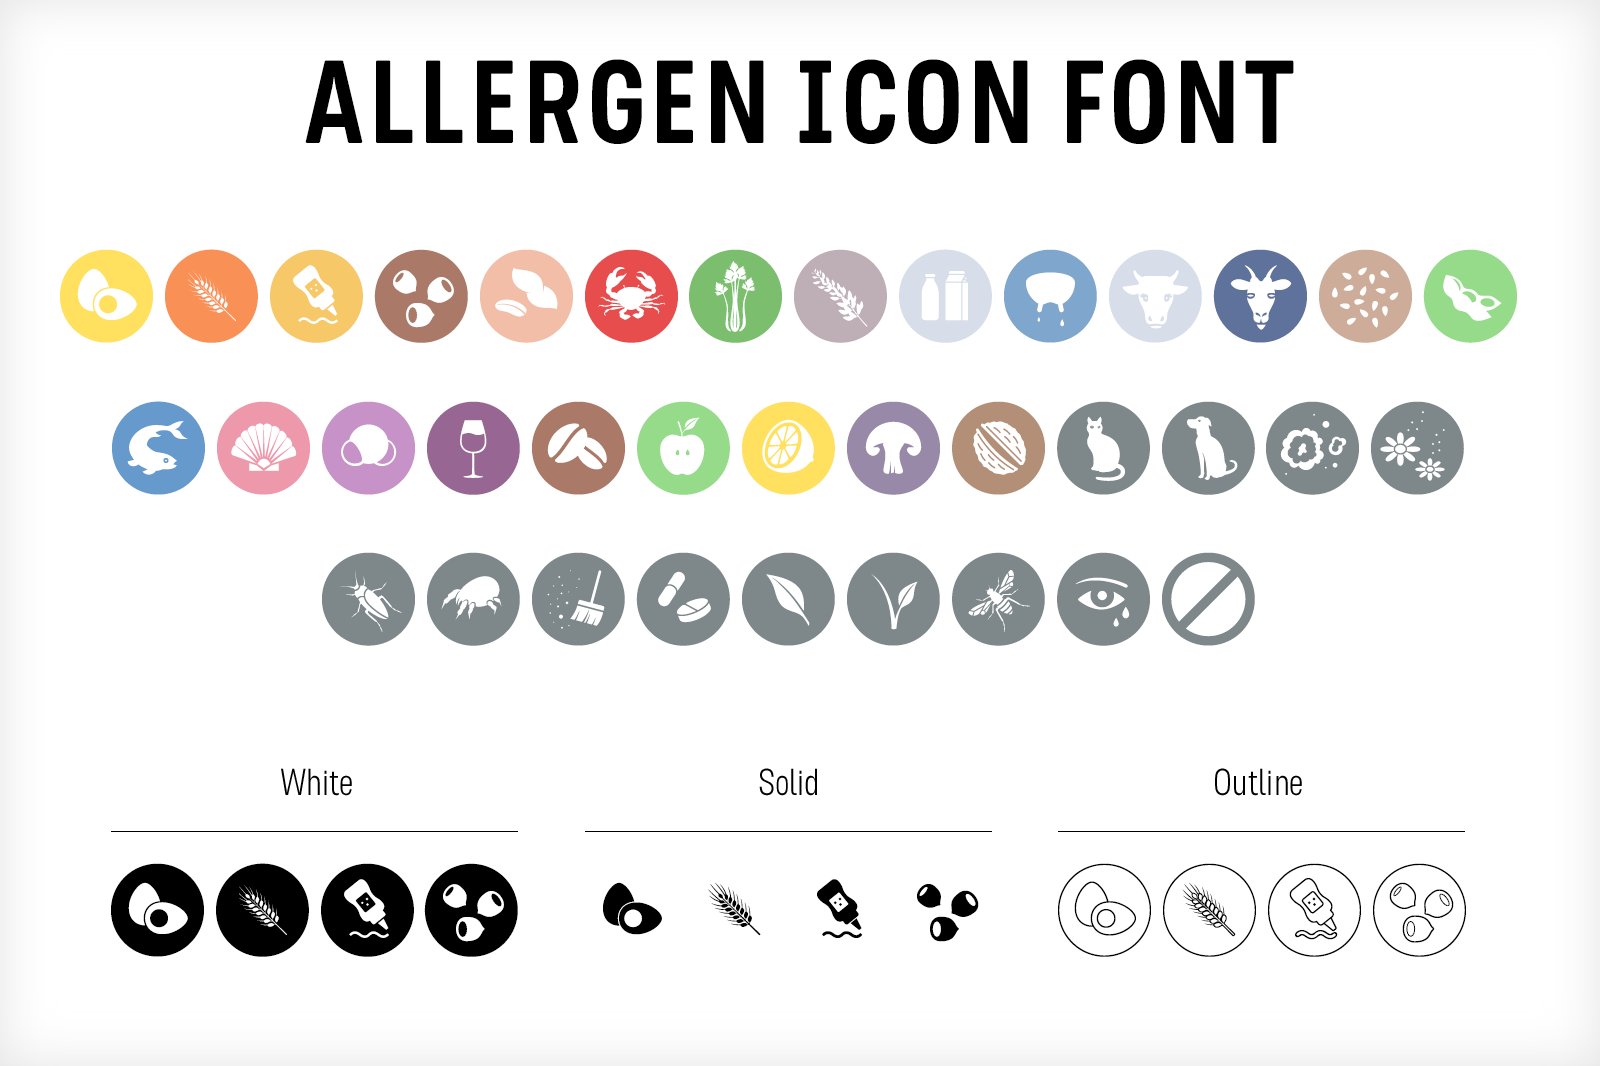 Food & Allergen icon font set cover image.